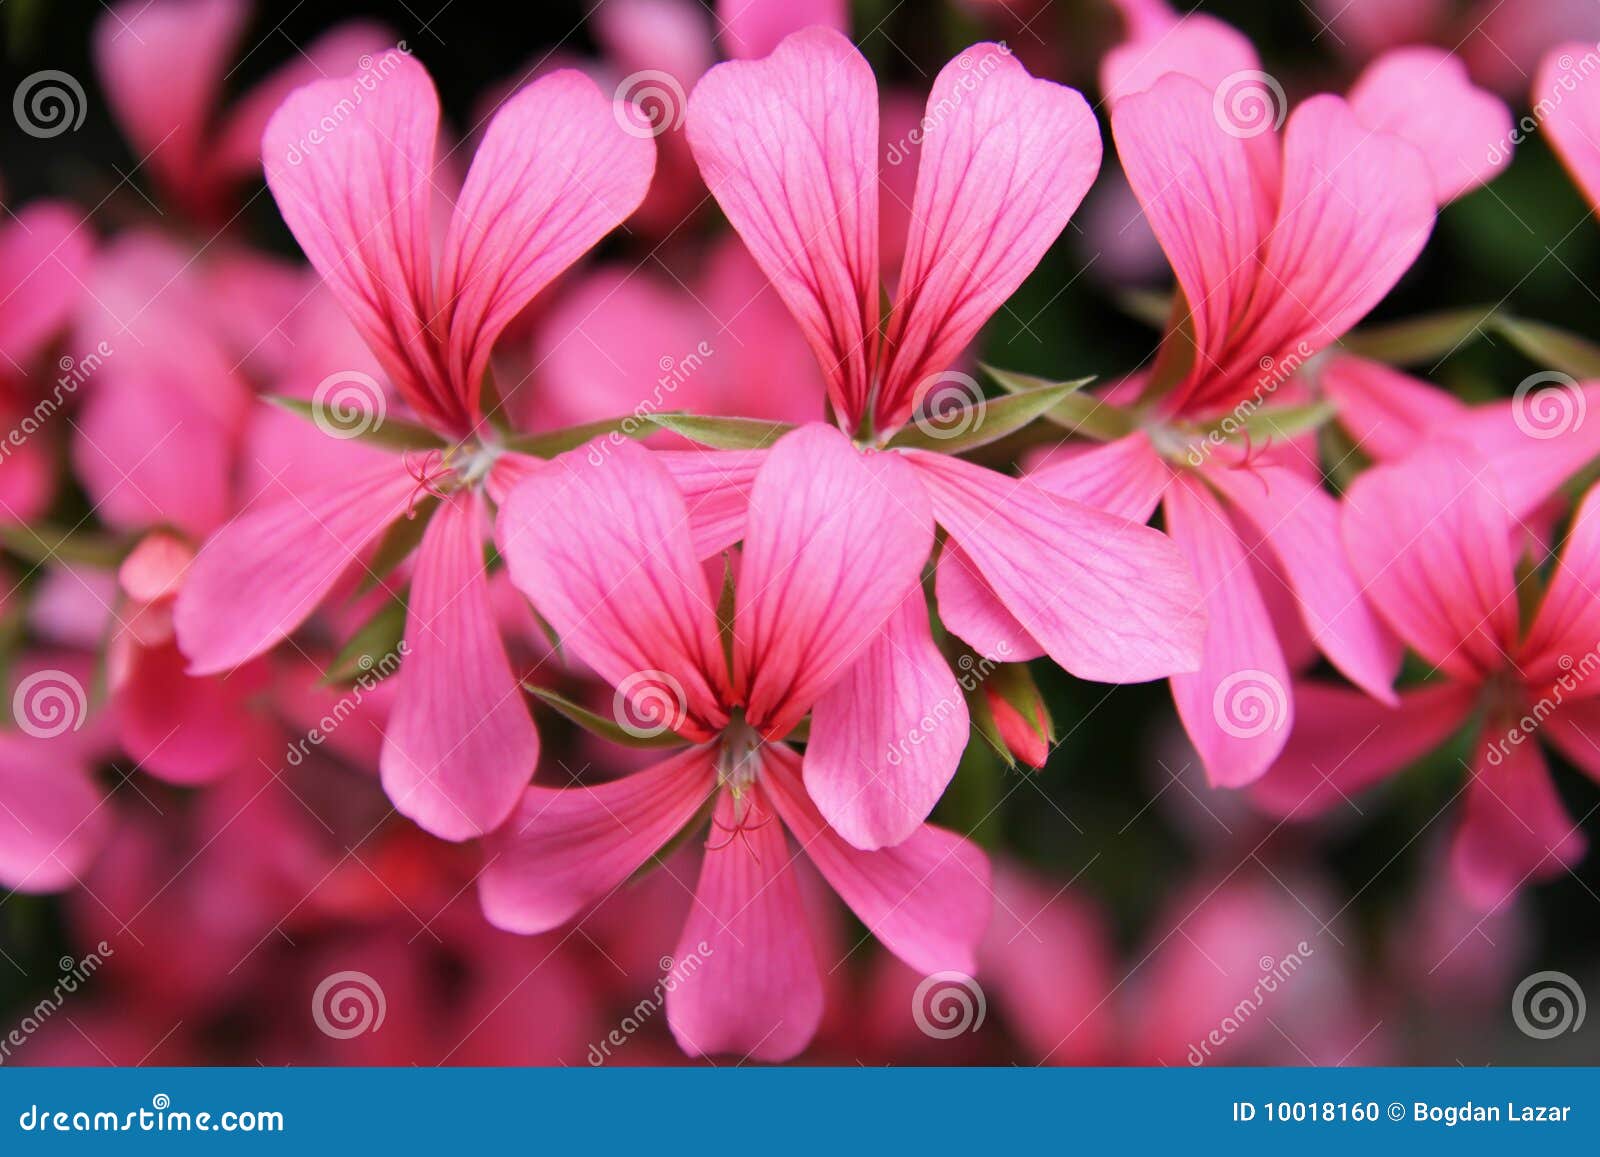 pink geranium cascade flowers